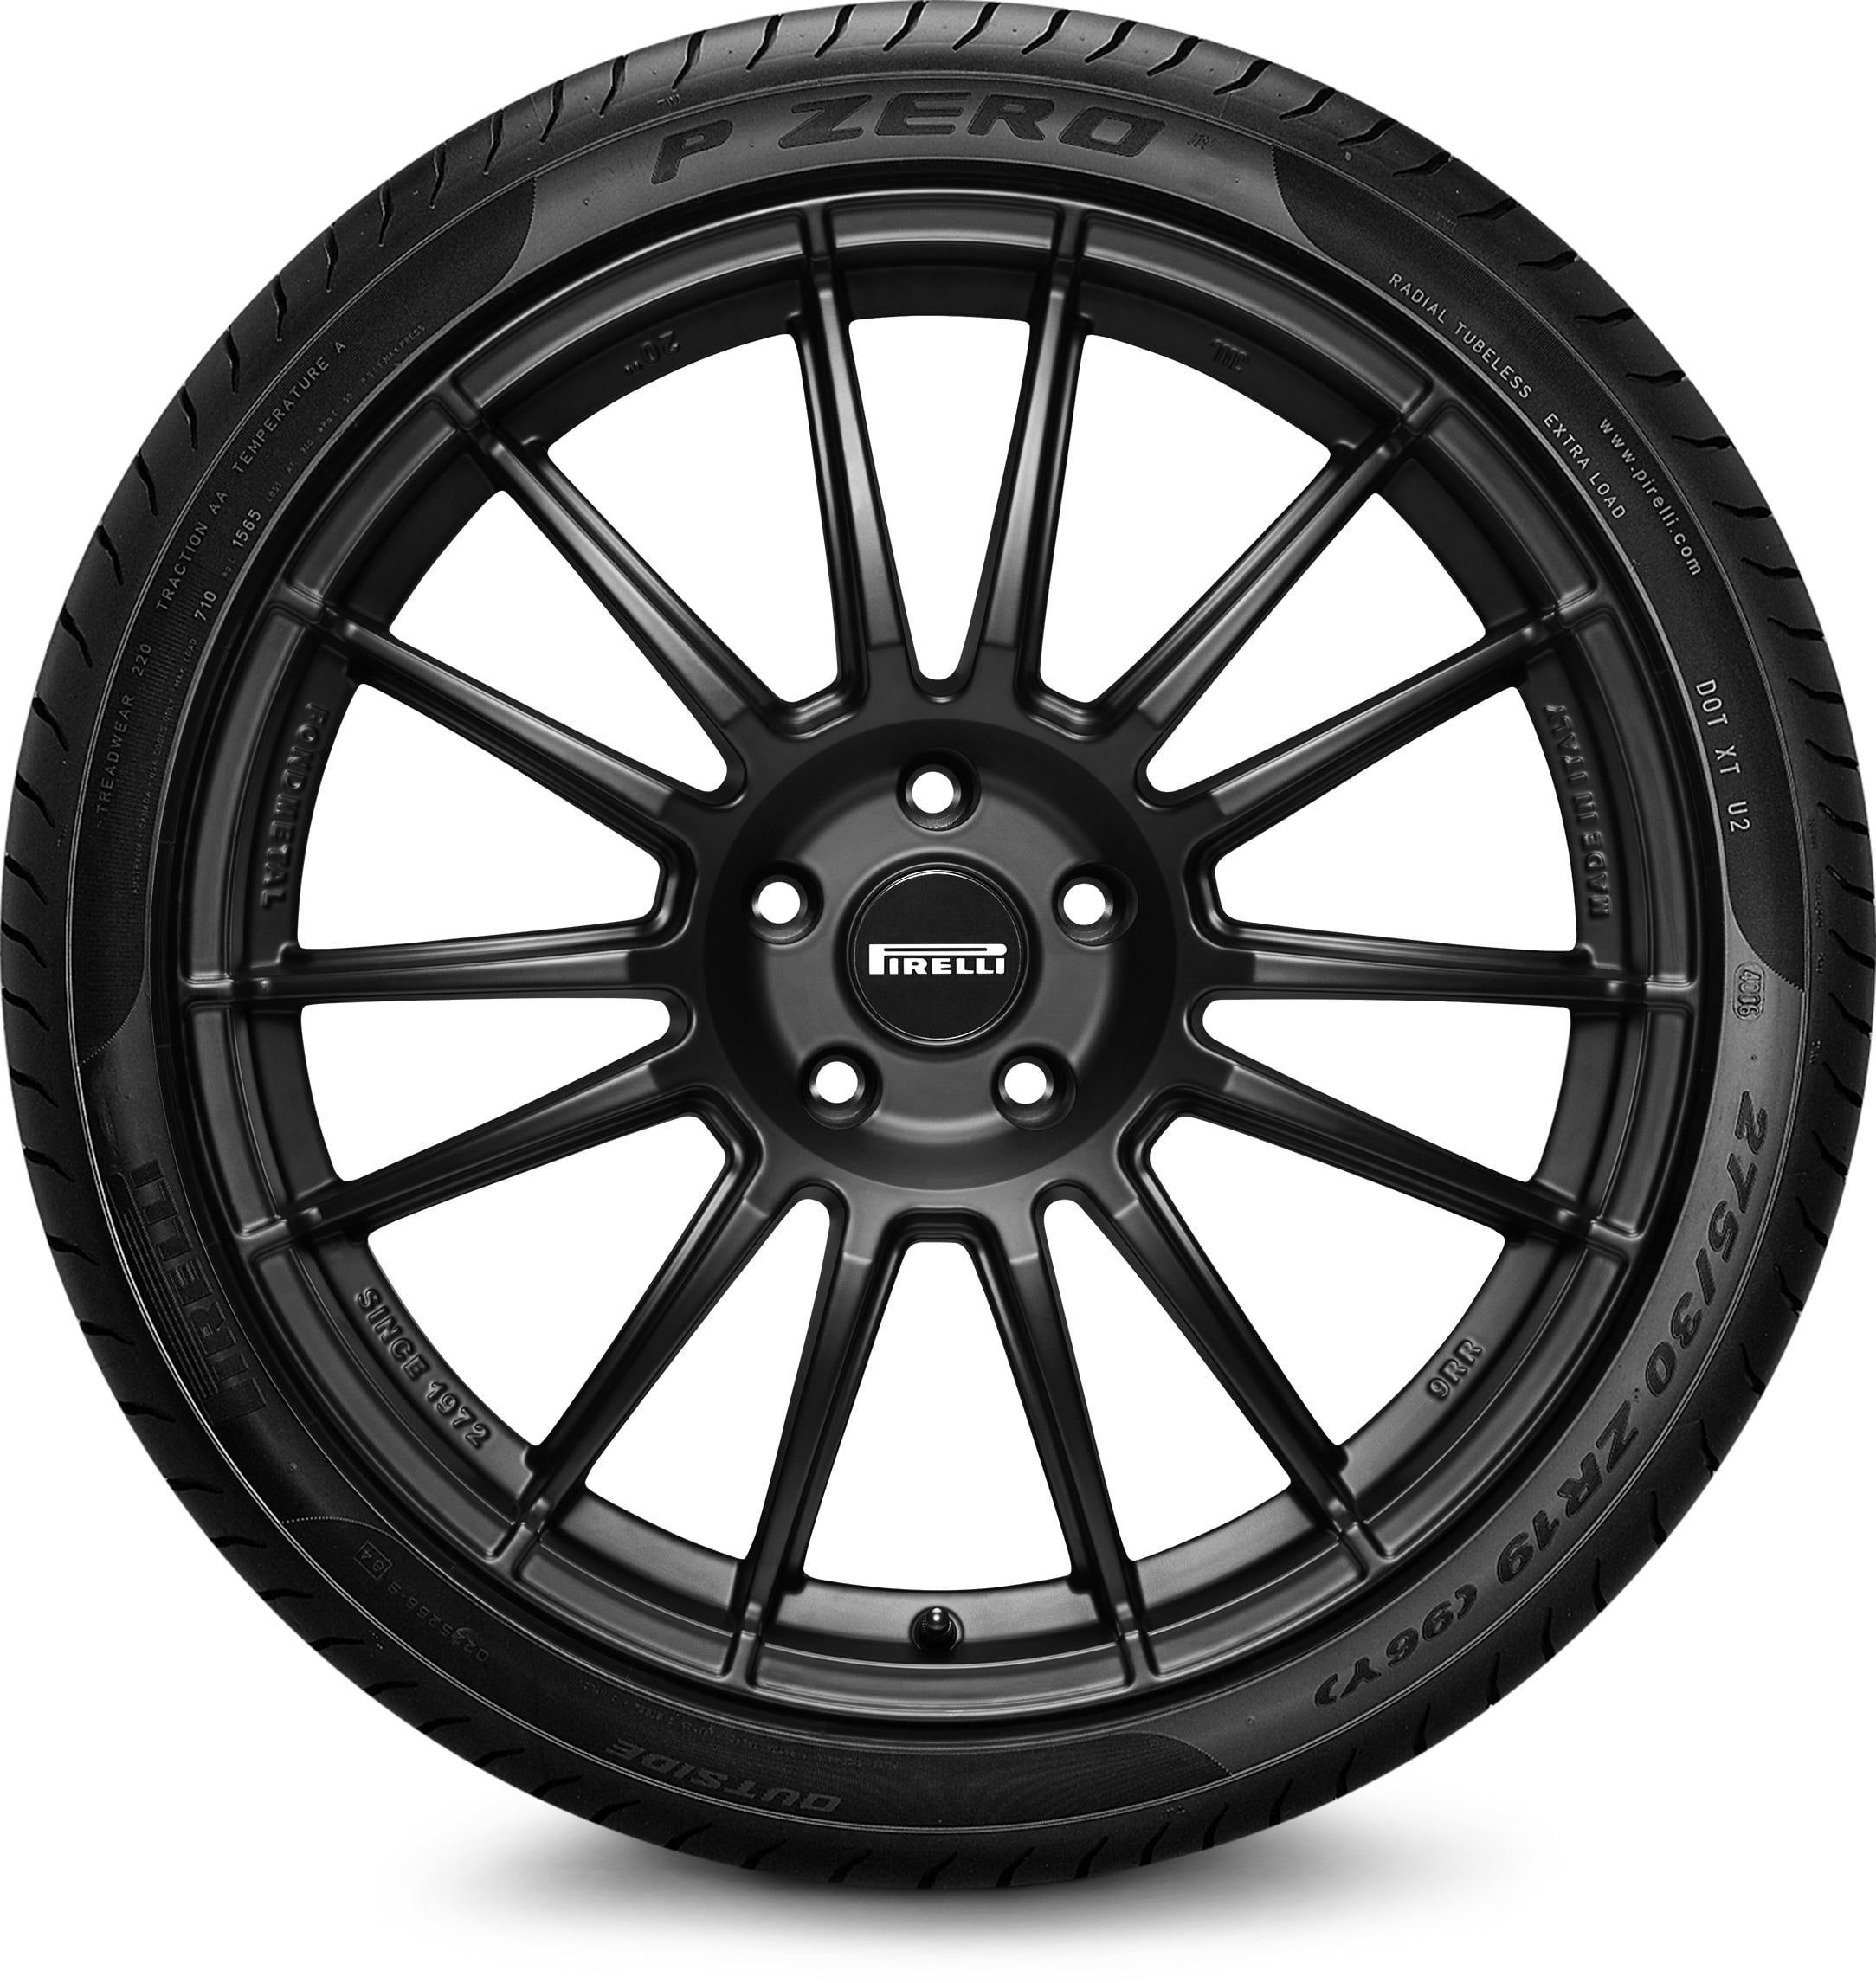 Pirelli P Zero 285/30R20 99 Y Tire - Walmart.com